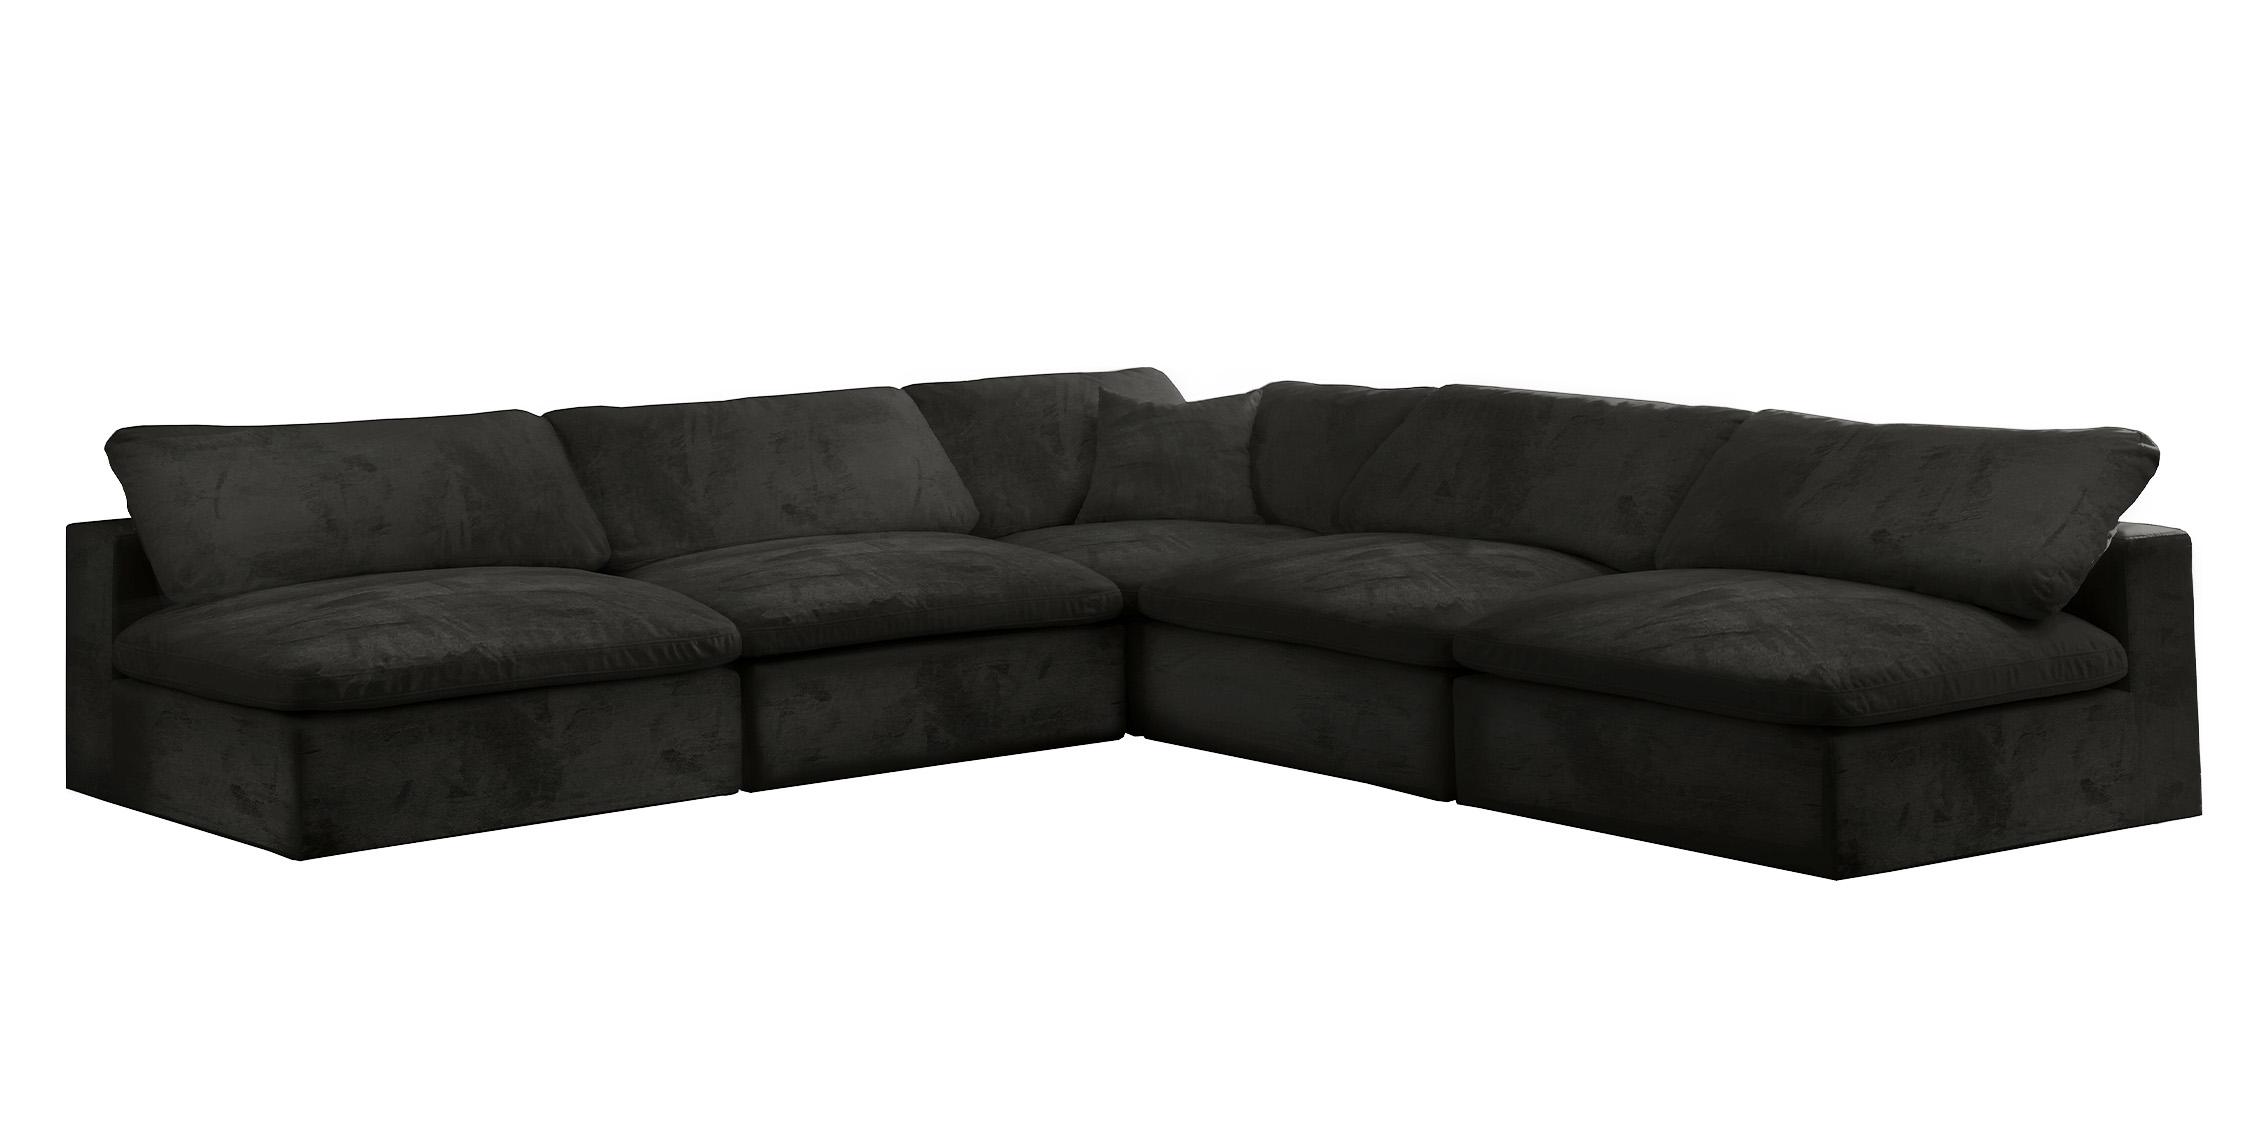 Contemporary, Modern Modular Sectional Sofa 634Black-Sec5B 634Black-Sec5B in Black Fabric